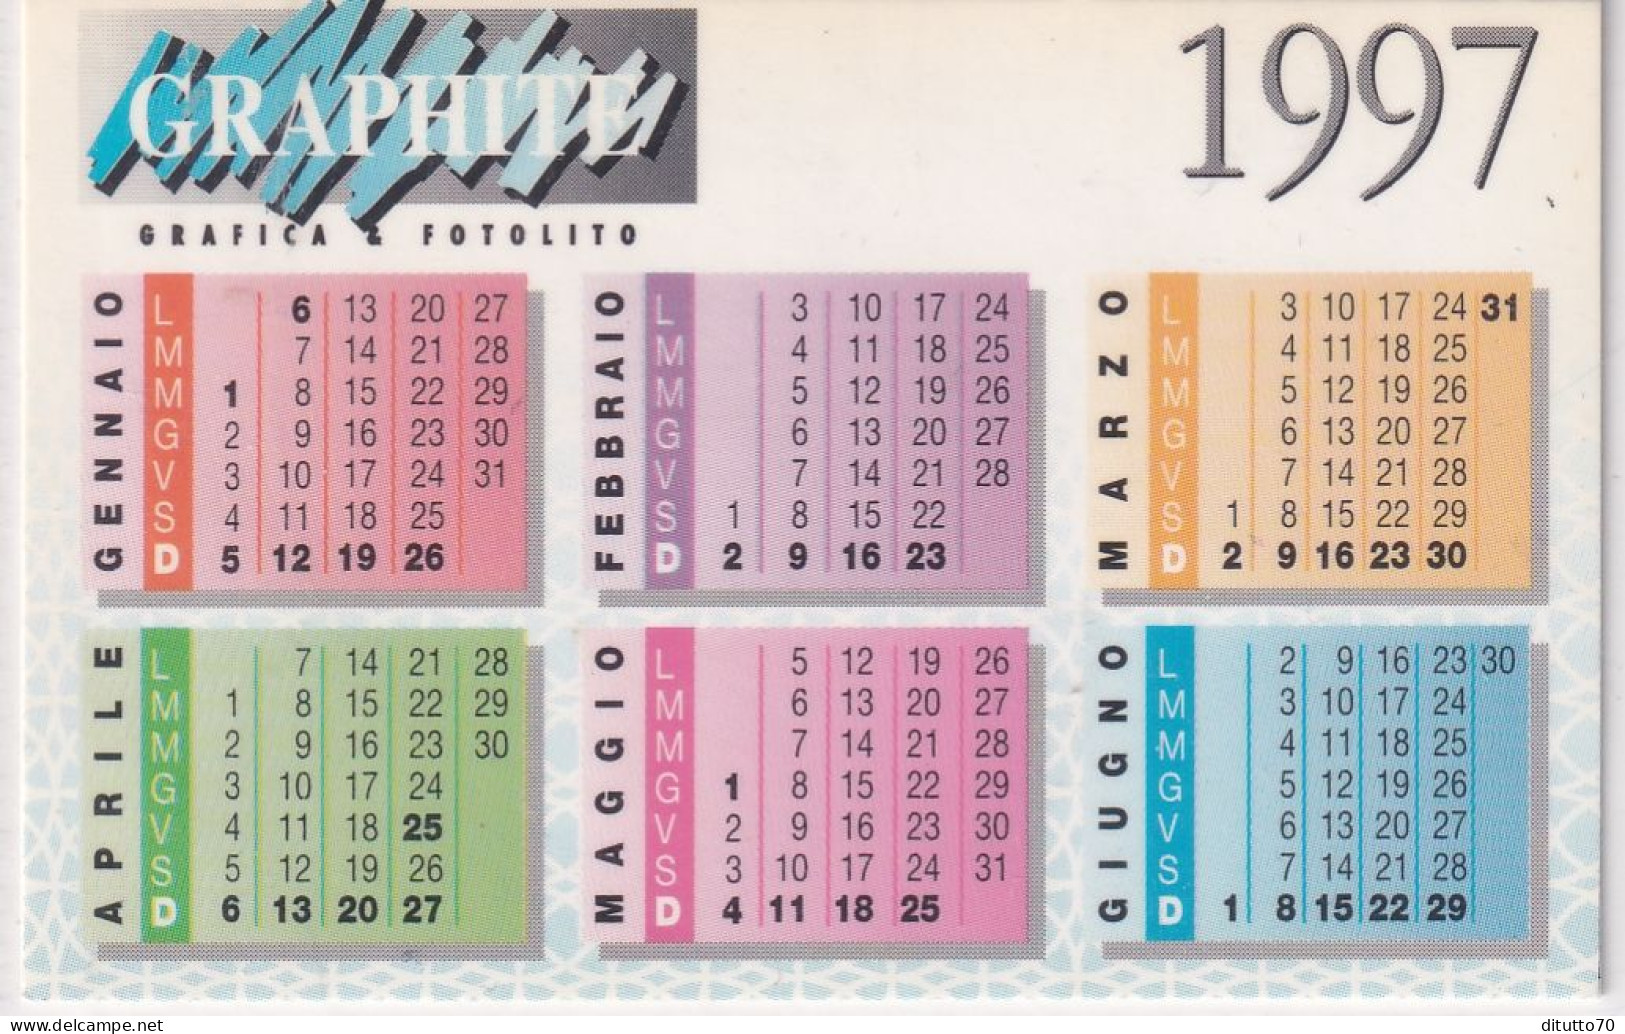 Calendarietto - Graphite - Anno 1997 - Klein Formaat: 1991-00